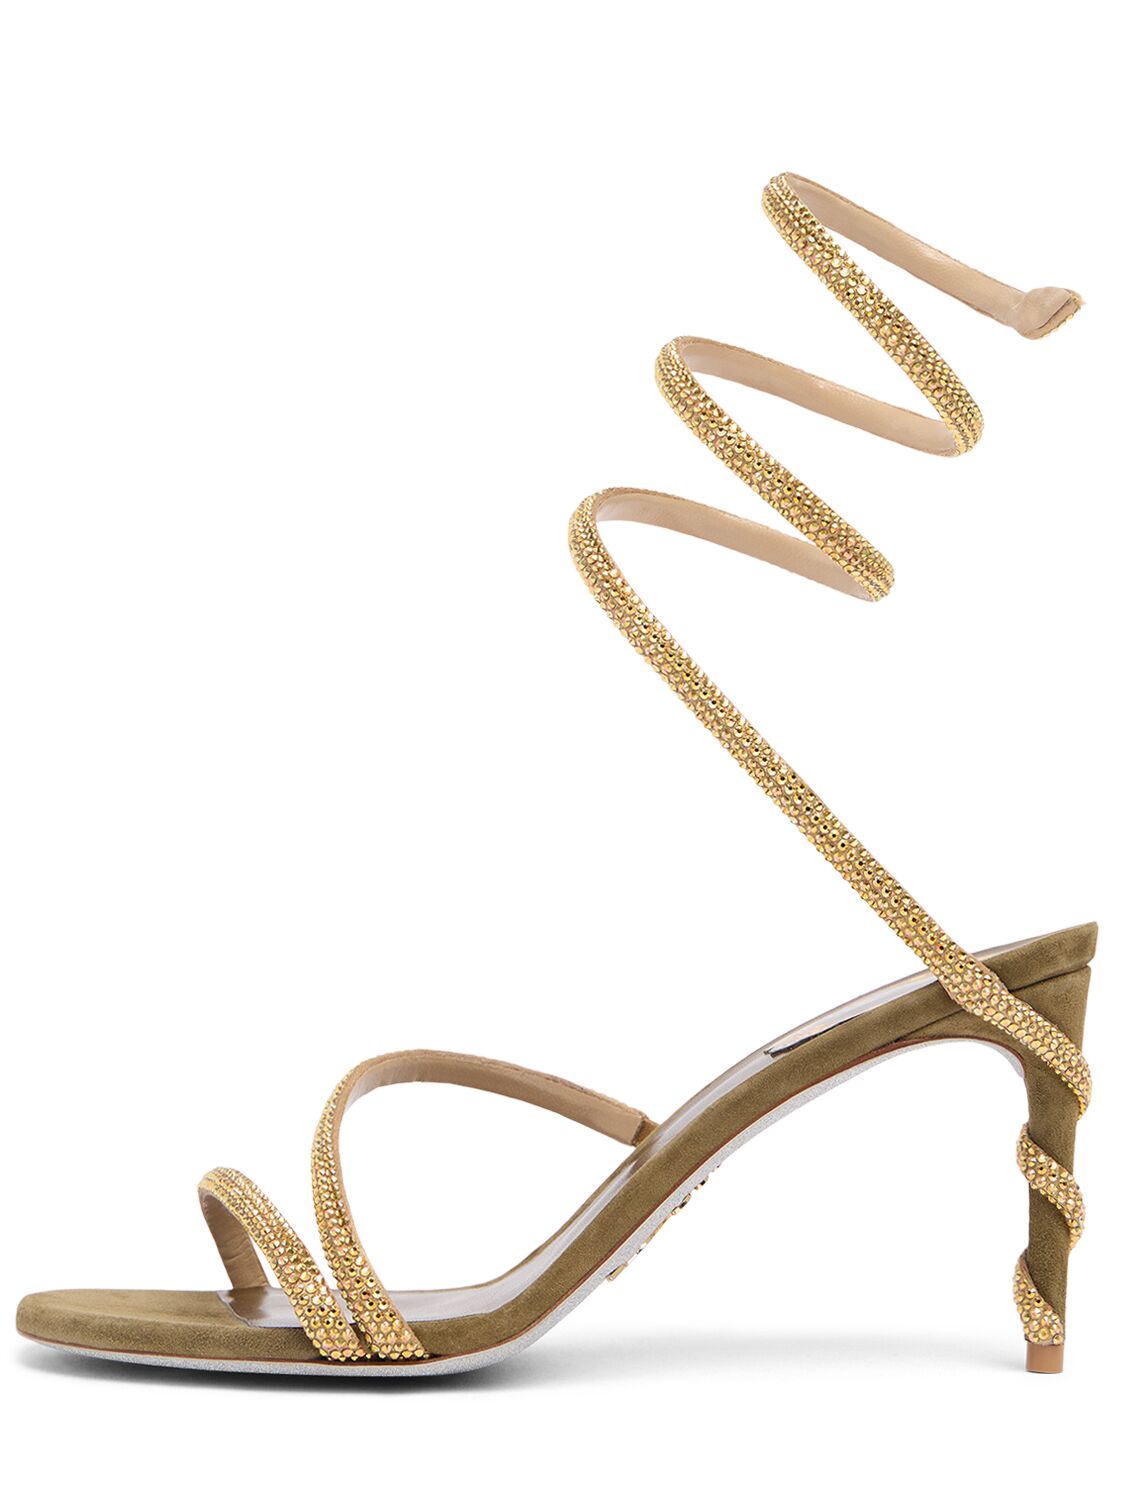 René Caovilla 105mm Margot Satin & Crystal Sandals In Green/gold